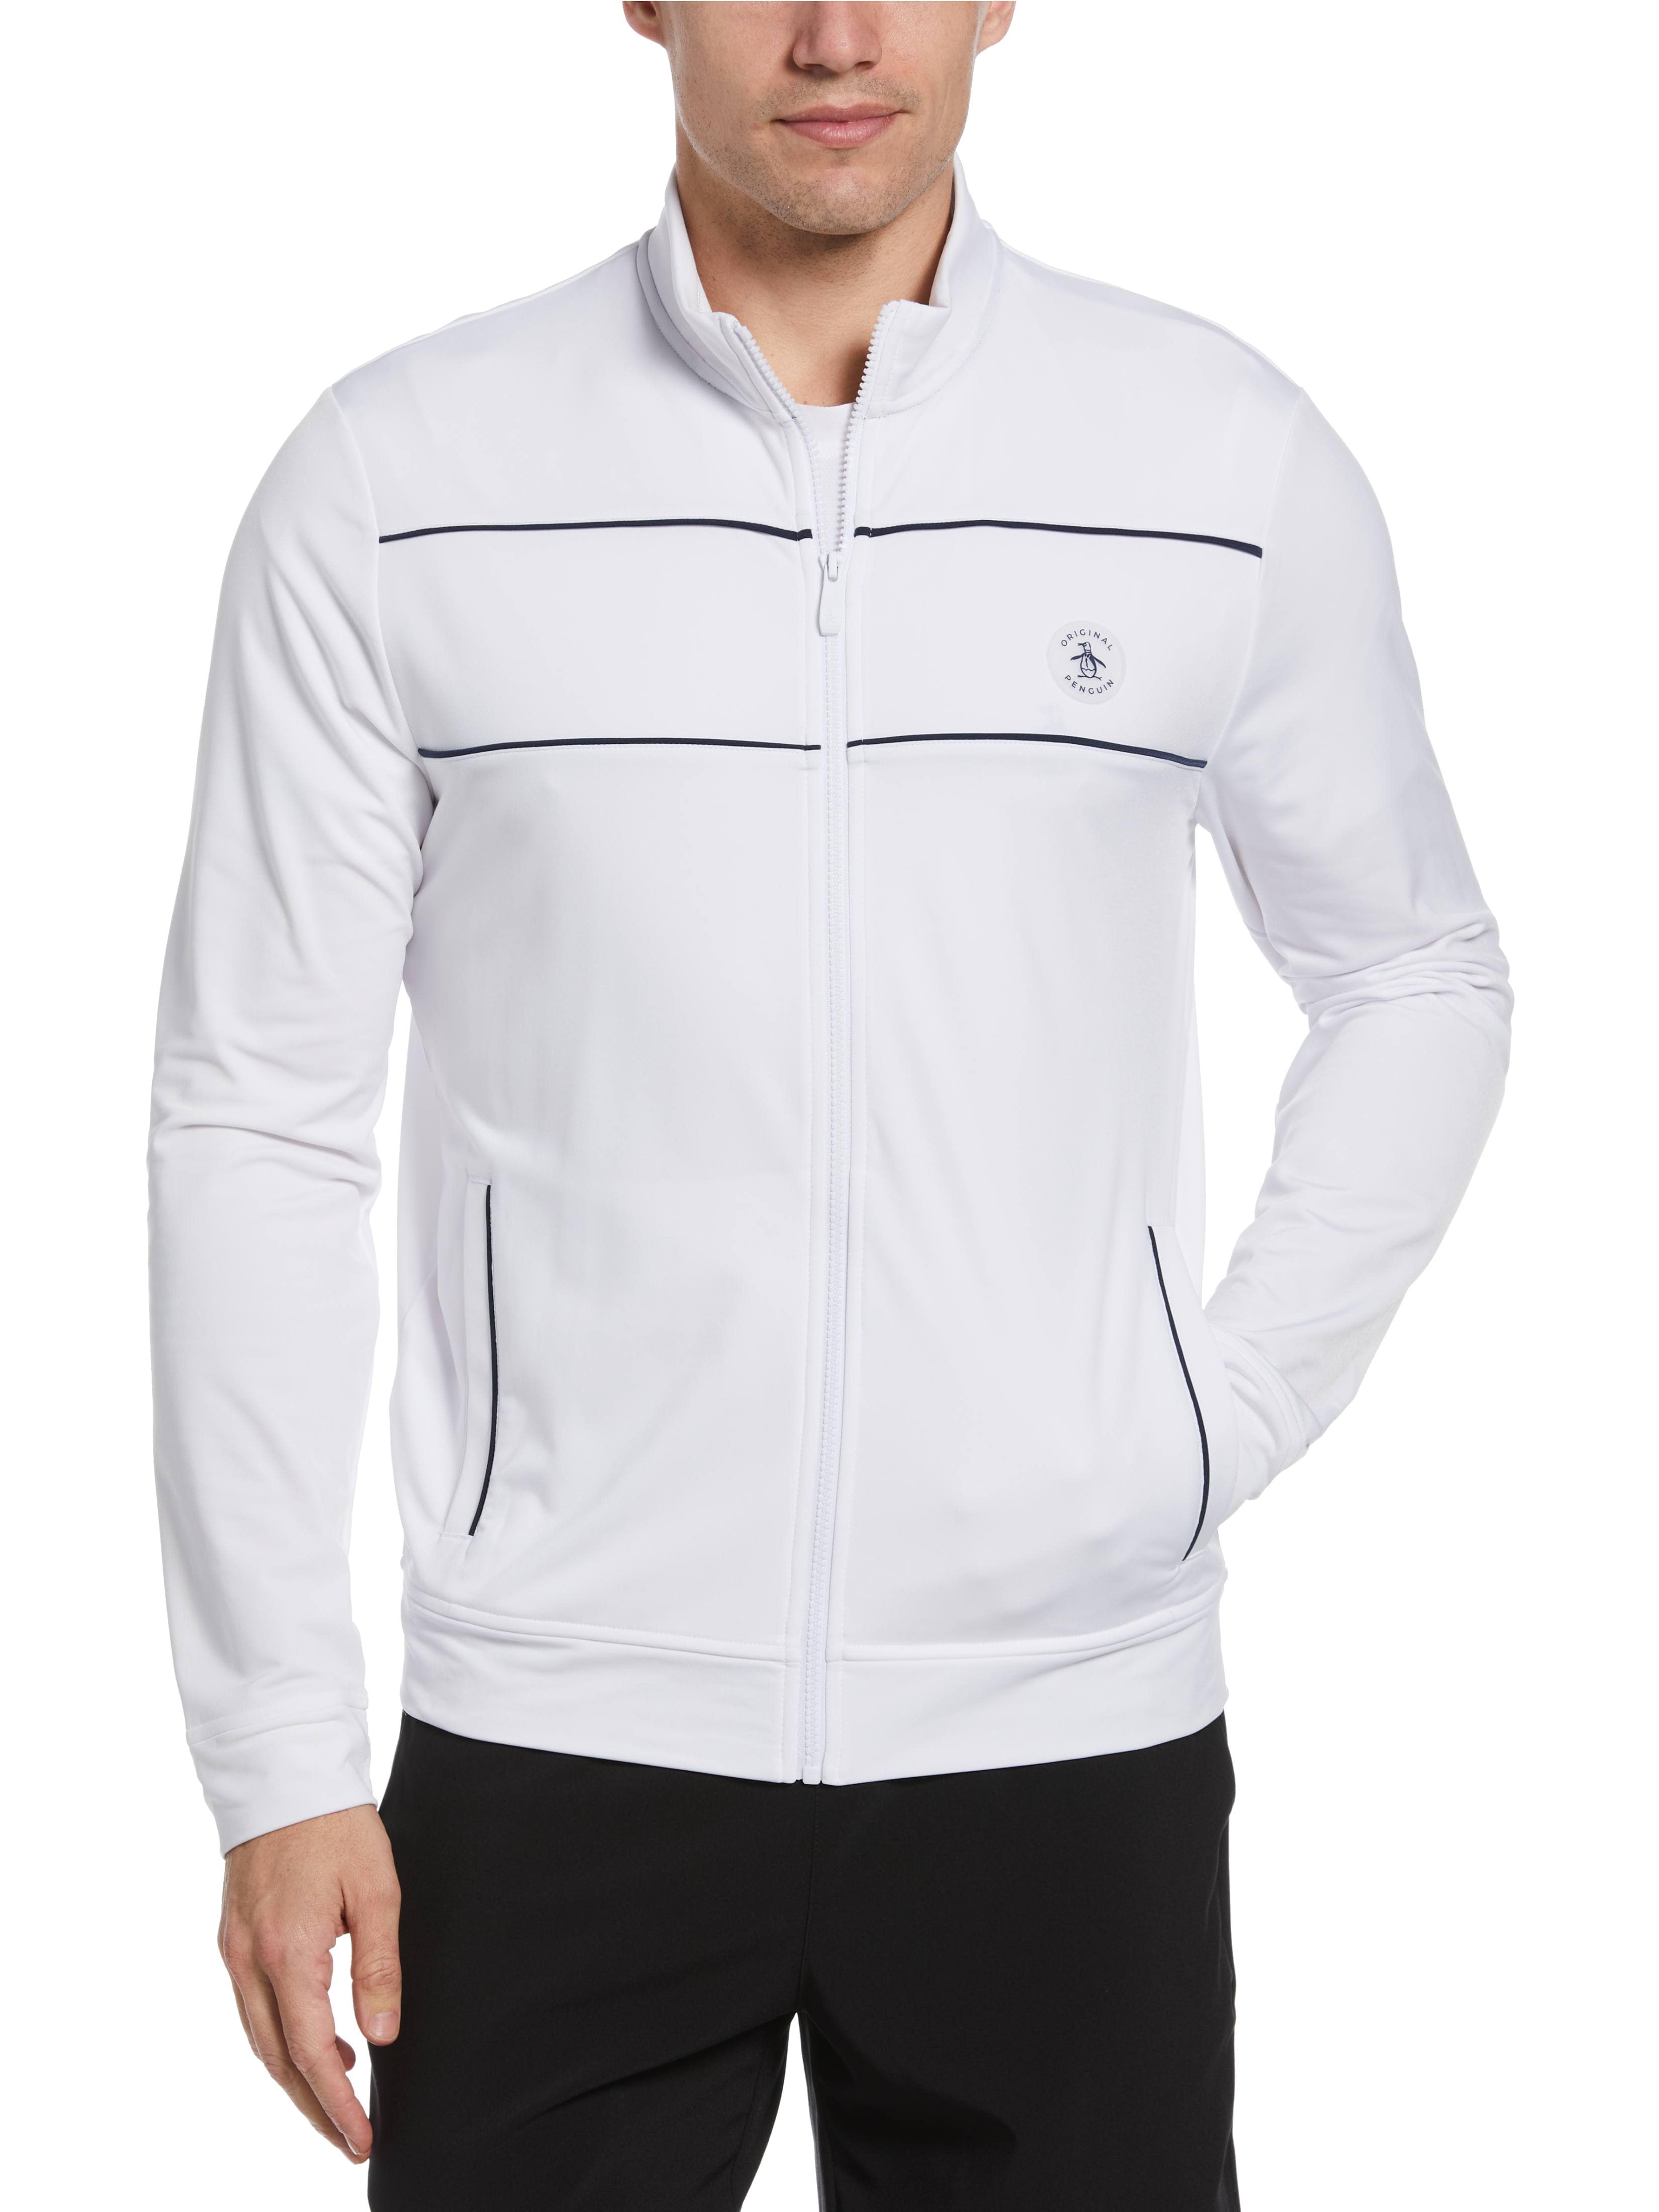 Original Penguin Mens Essential Tennis Track Jacket Top, Size Large, White, Polyester/Elastane | Golf Apparel Shop